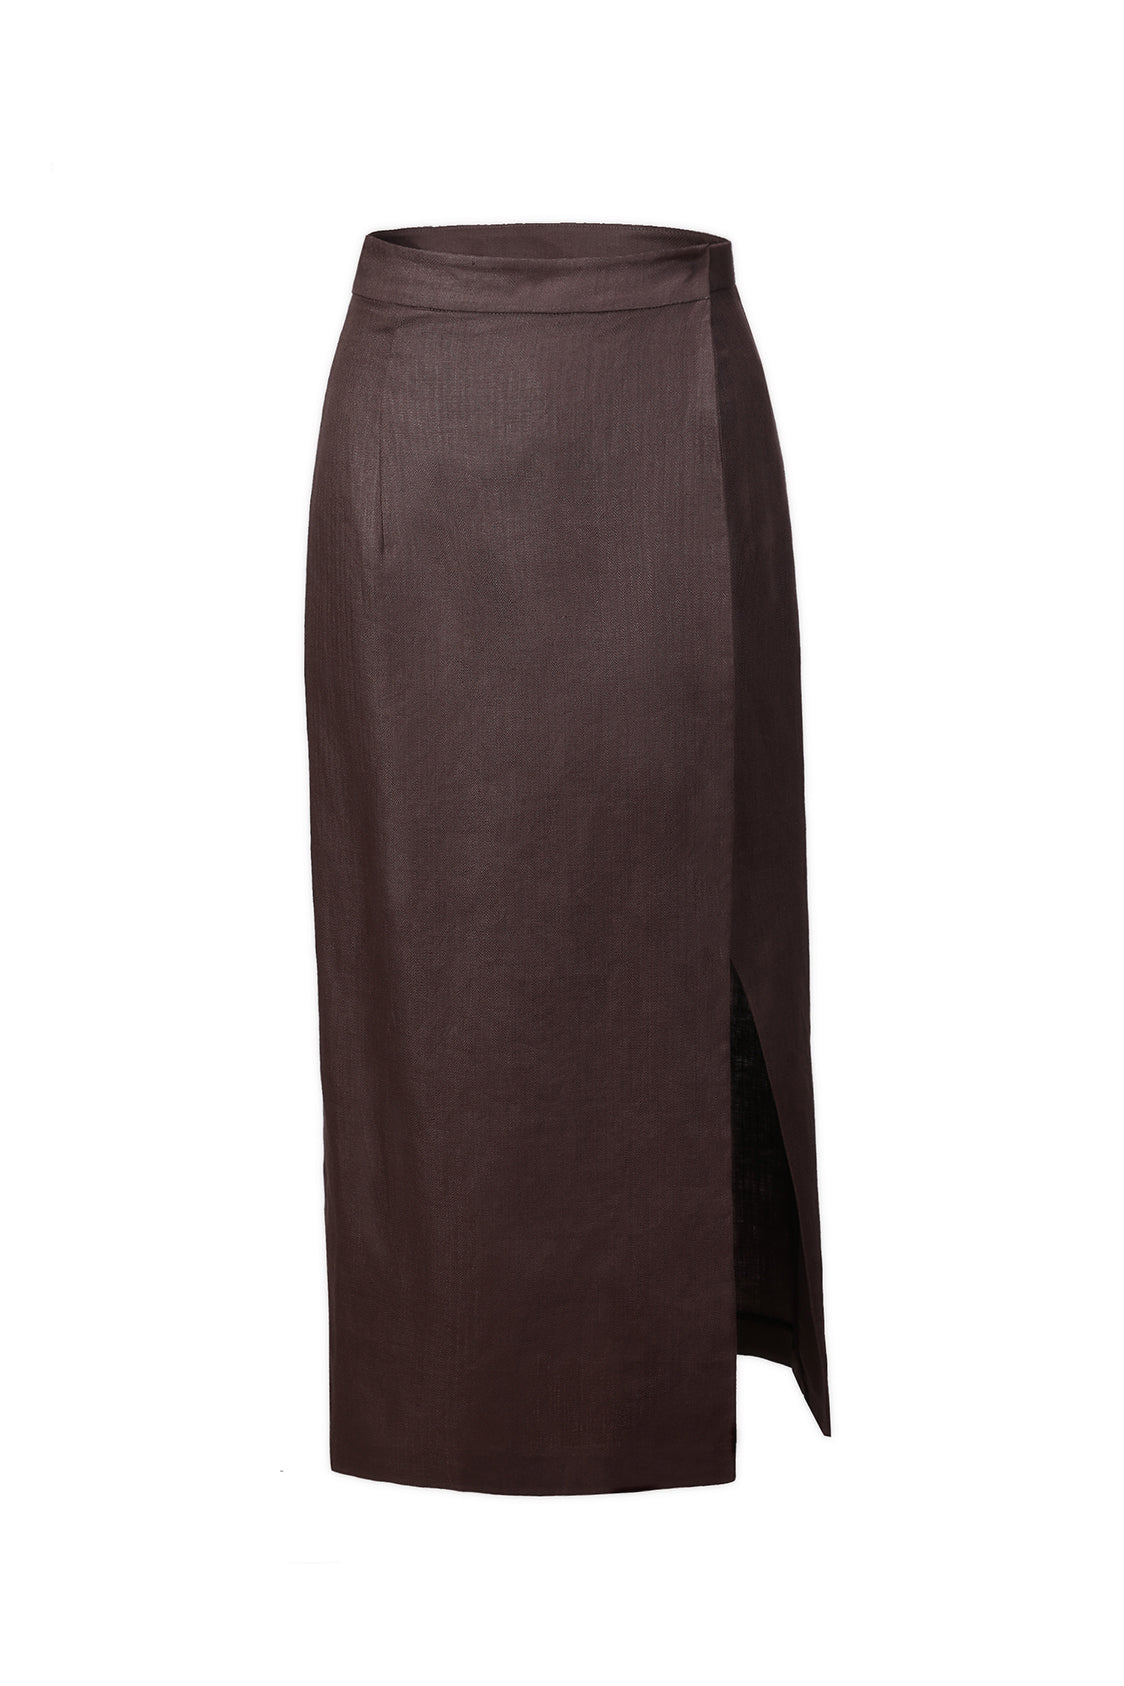 The Herringbone Linen Midi Skirt